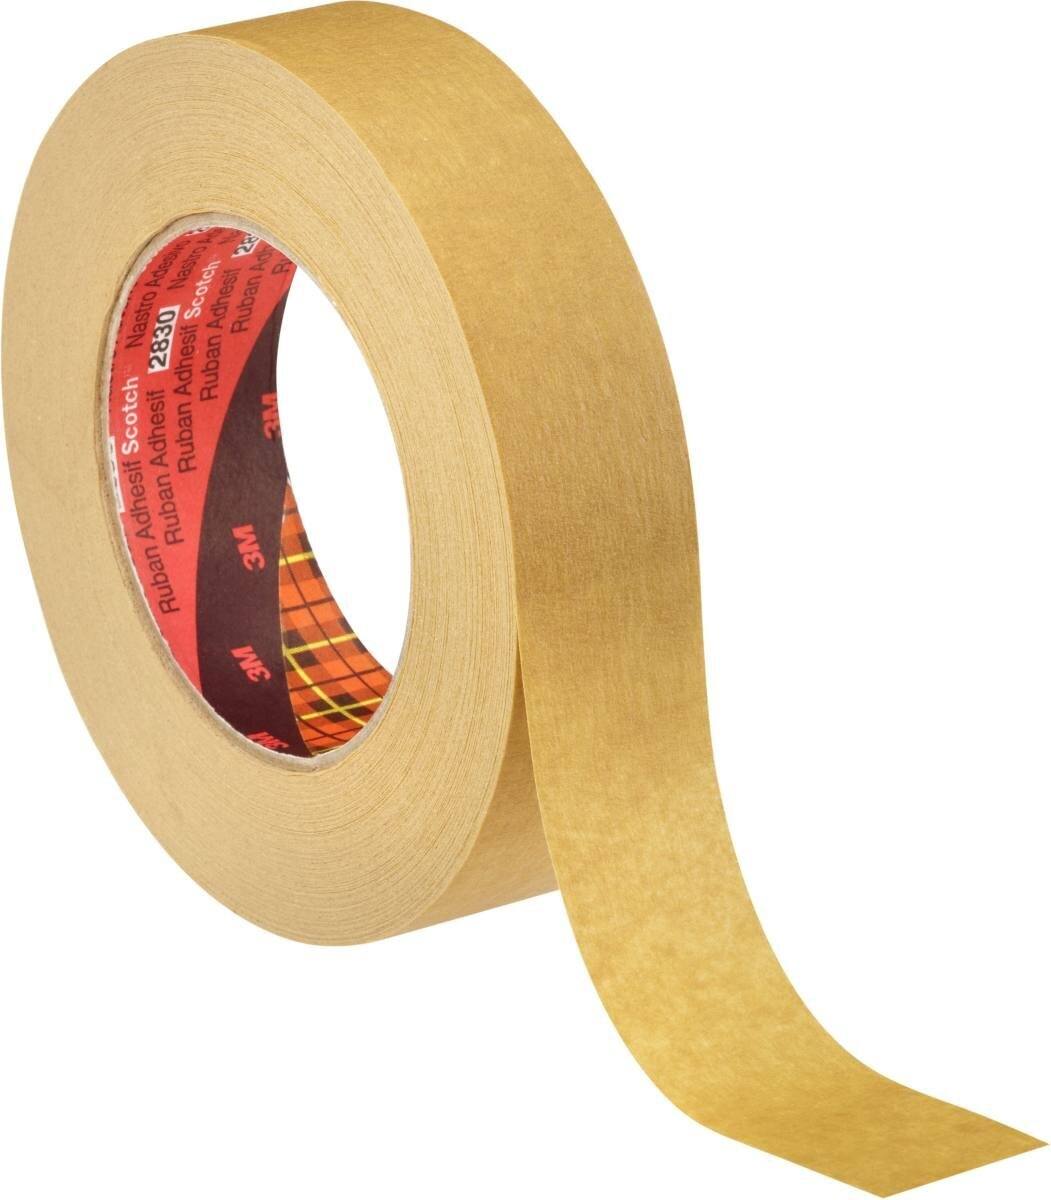 3M Scotch papieren tape 2830, bruin, 72 mm x 50 m, 0,175 mm